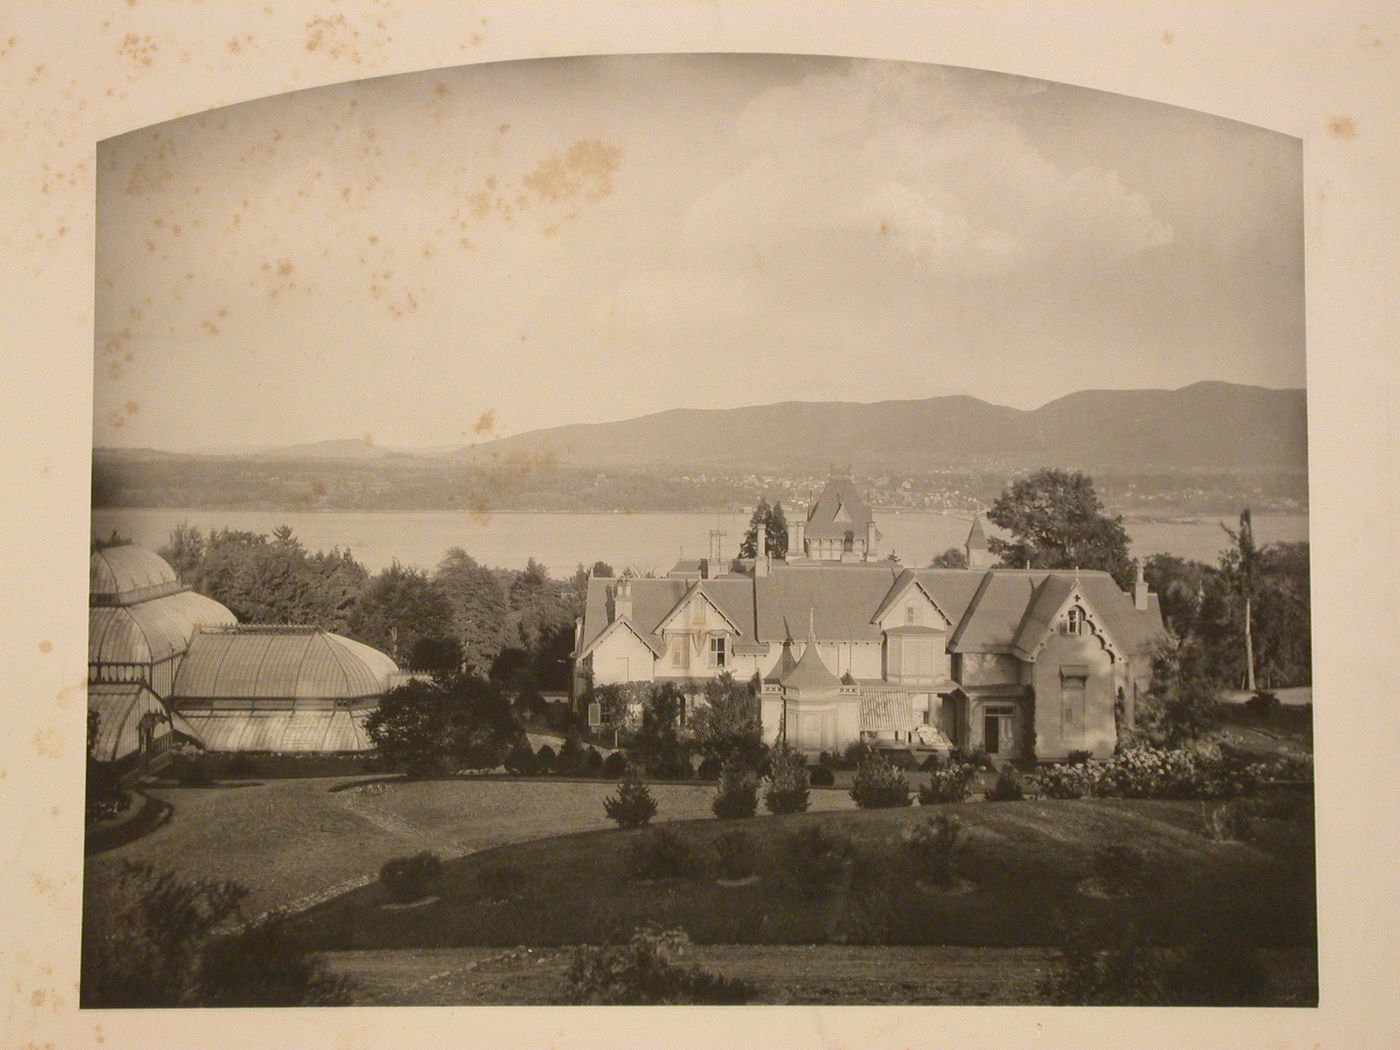 View of Rozenhof, residence of S. R. Van Duzer, looking towards the Hudson River, Newburgh, New York